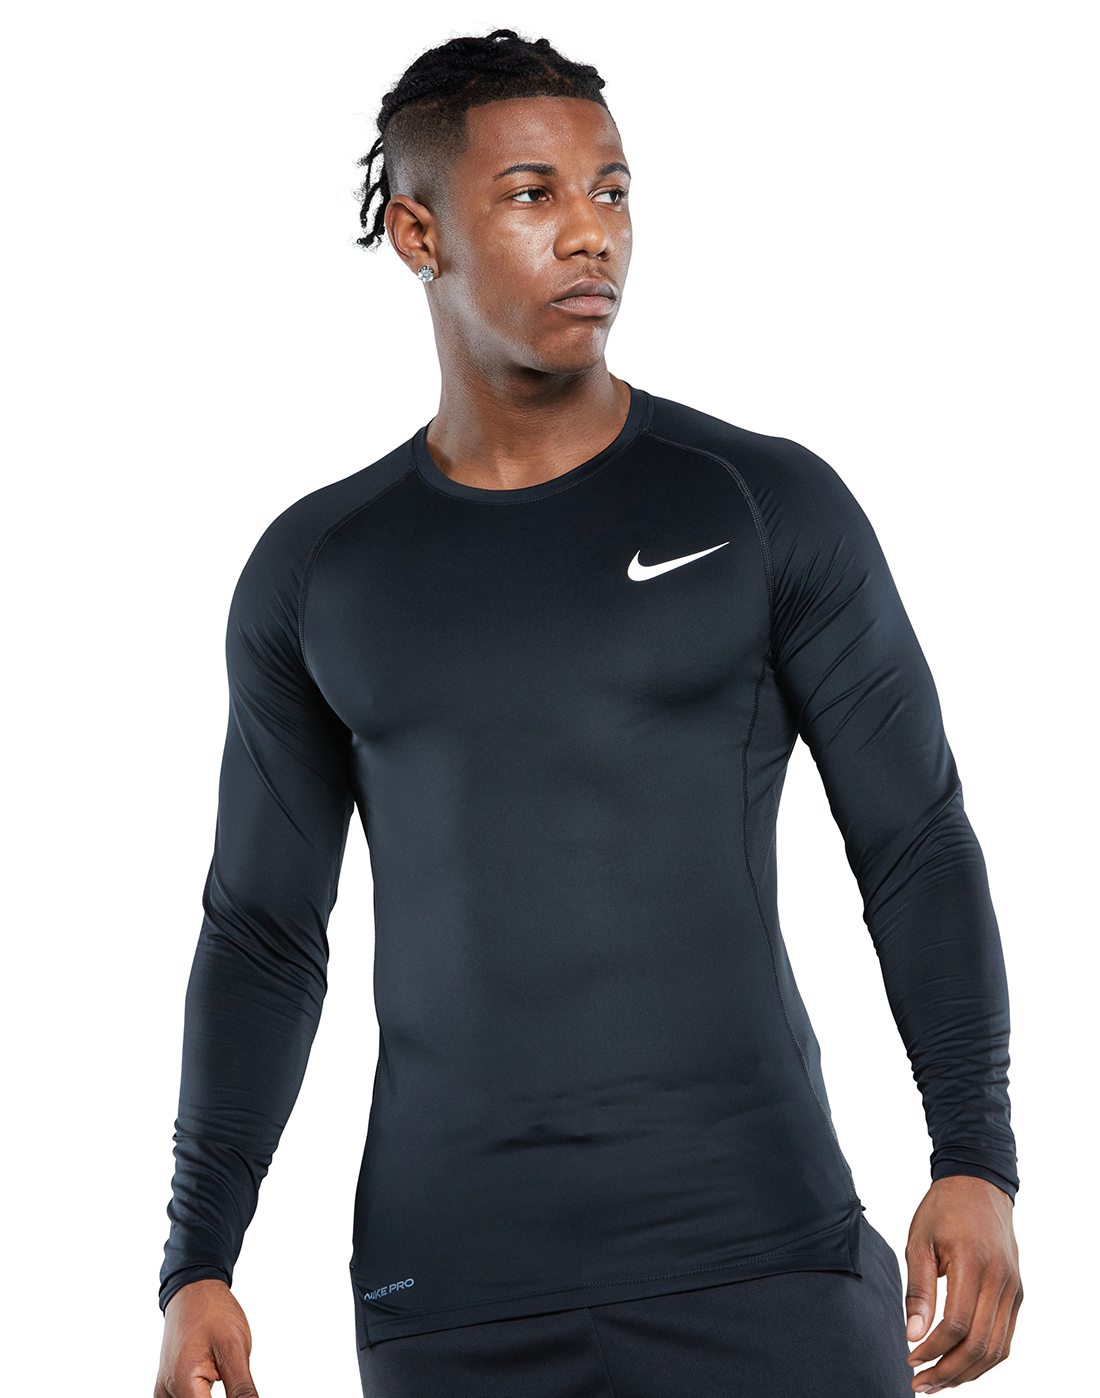 Nike Mens Pro Baselayer Long Sleeve Top - Black | Life Style Sports IE